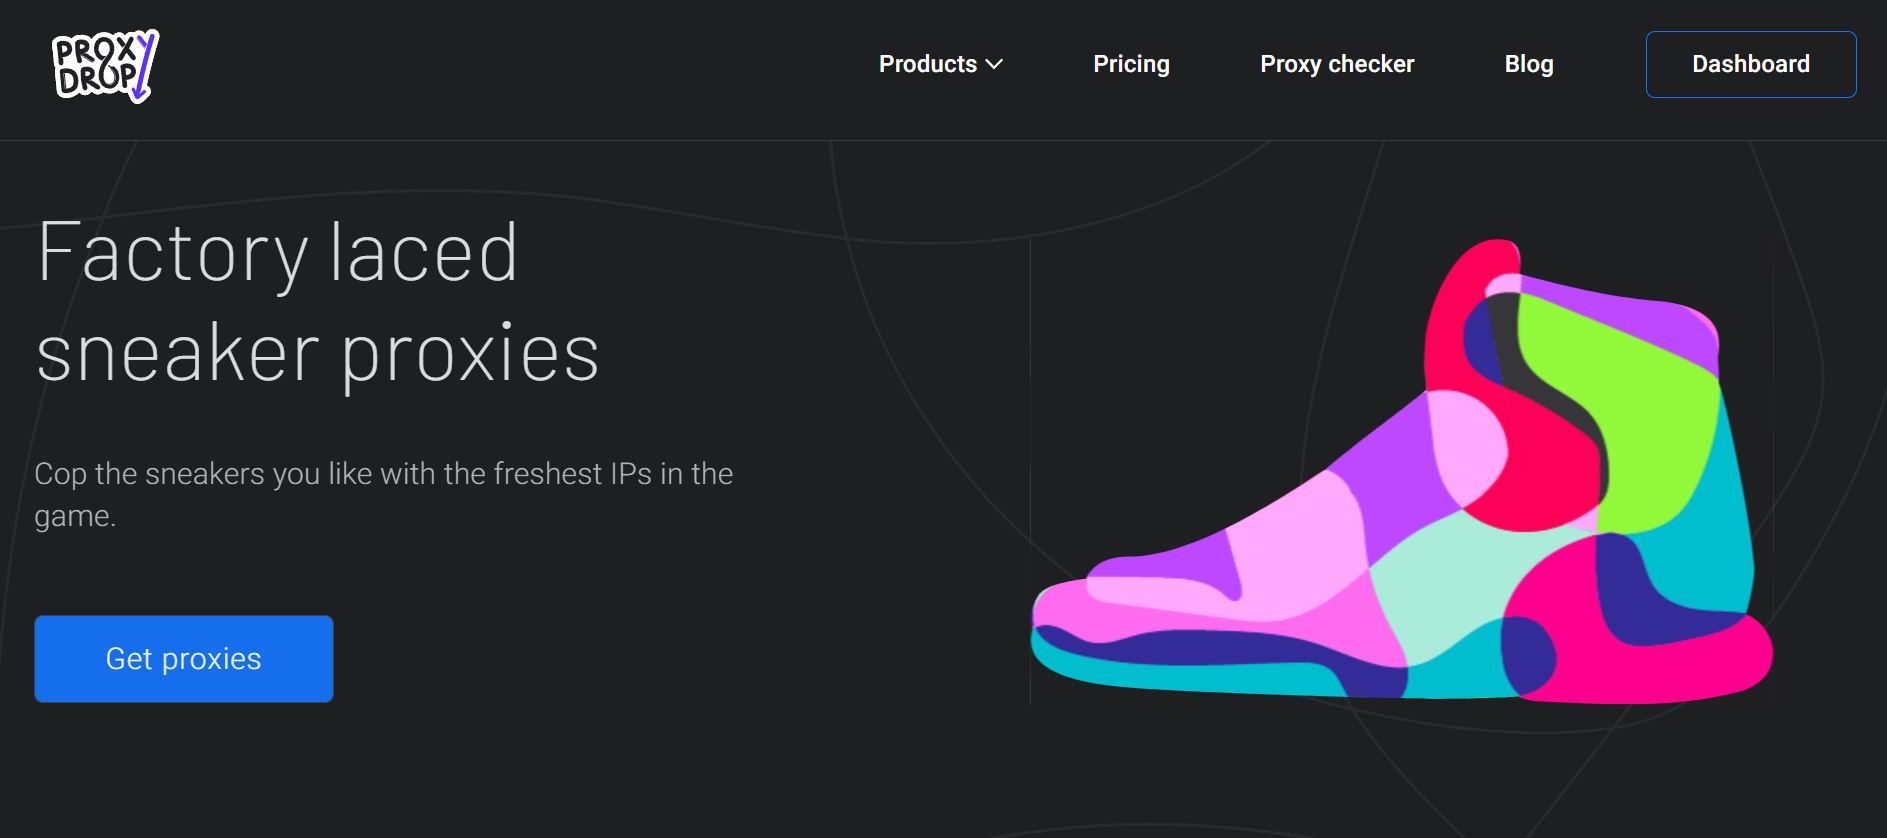 Proxydrop- Best Nike Proxies